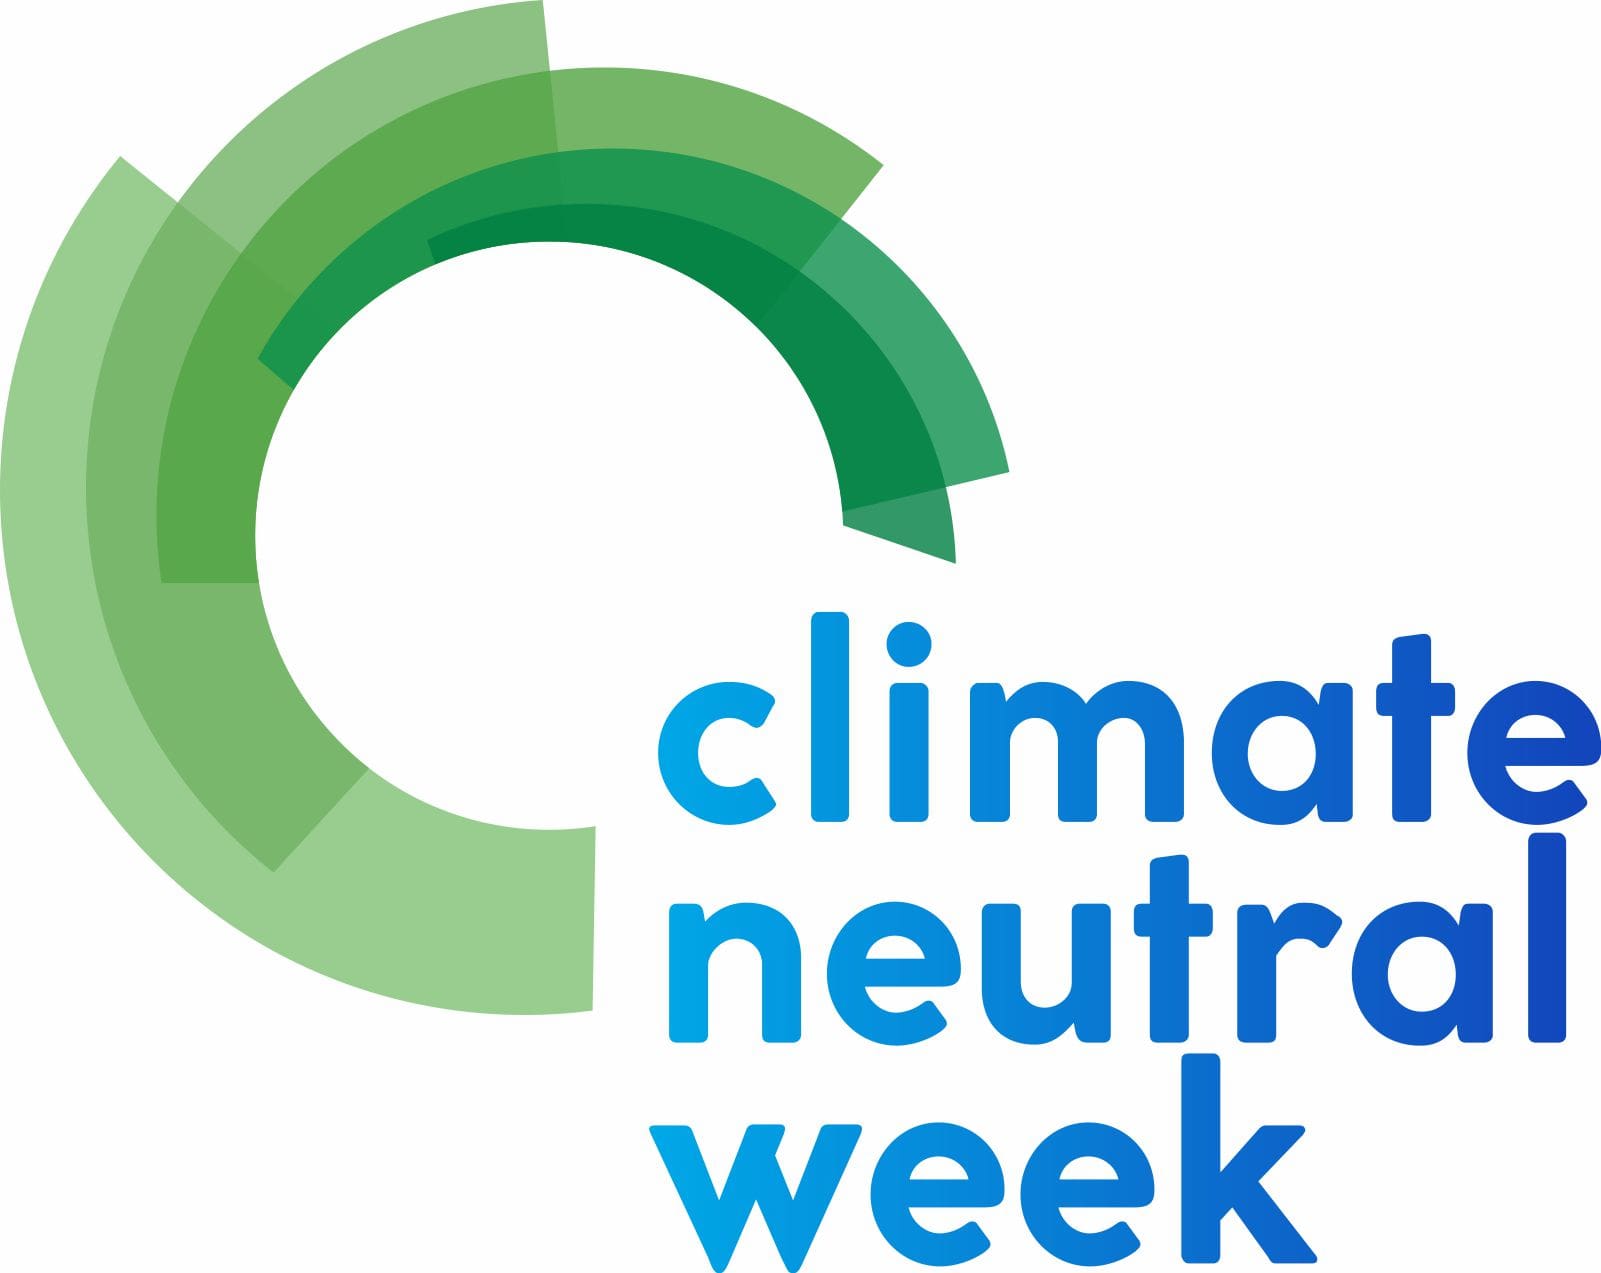 clube climate neutral week logo final